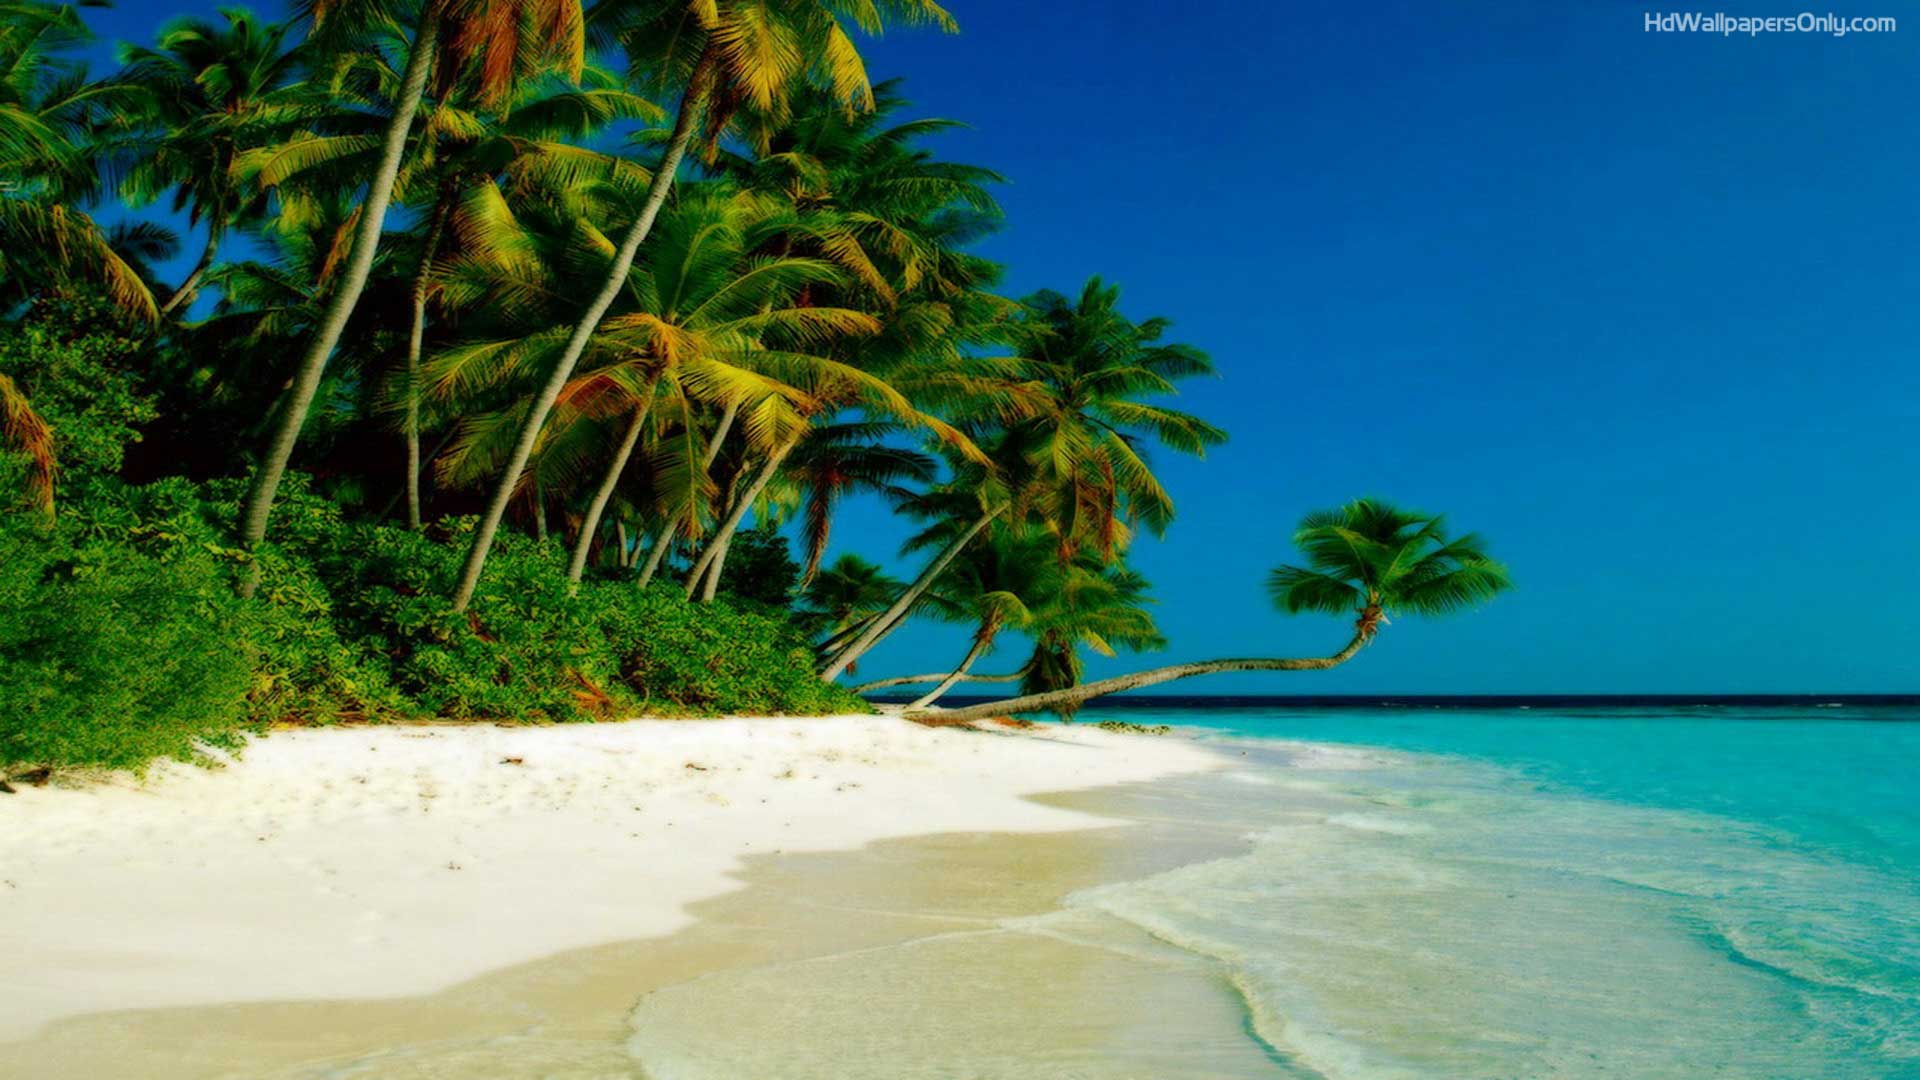 Beach HD Wallpaper 1080p Quality Image